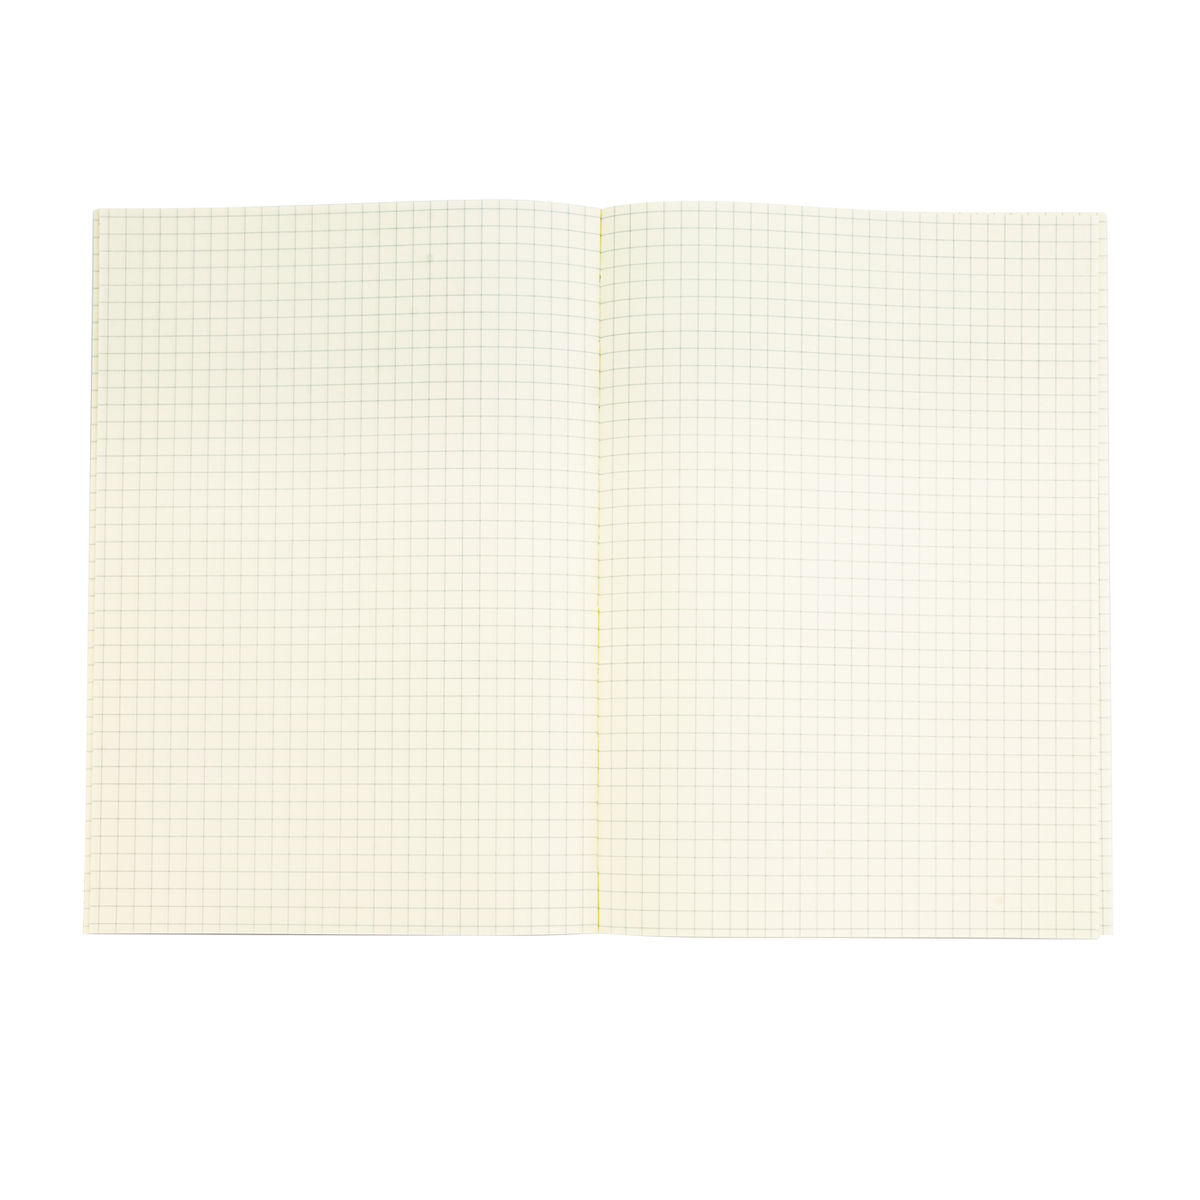 Tomoe River Cream A5 Notebook 5mm Grid 68gsm